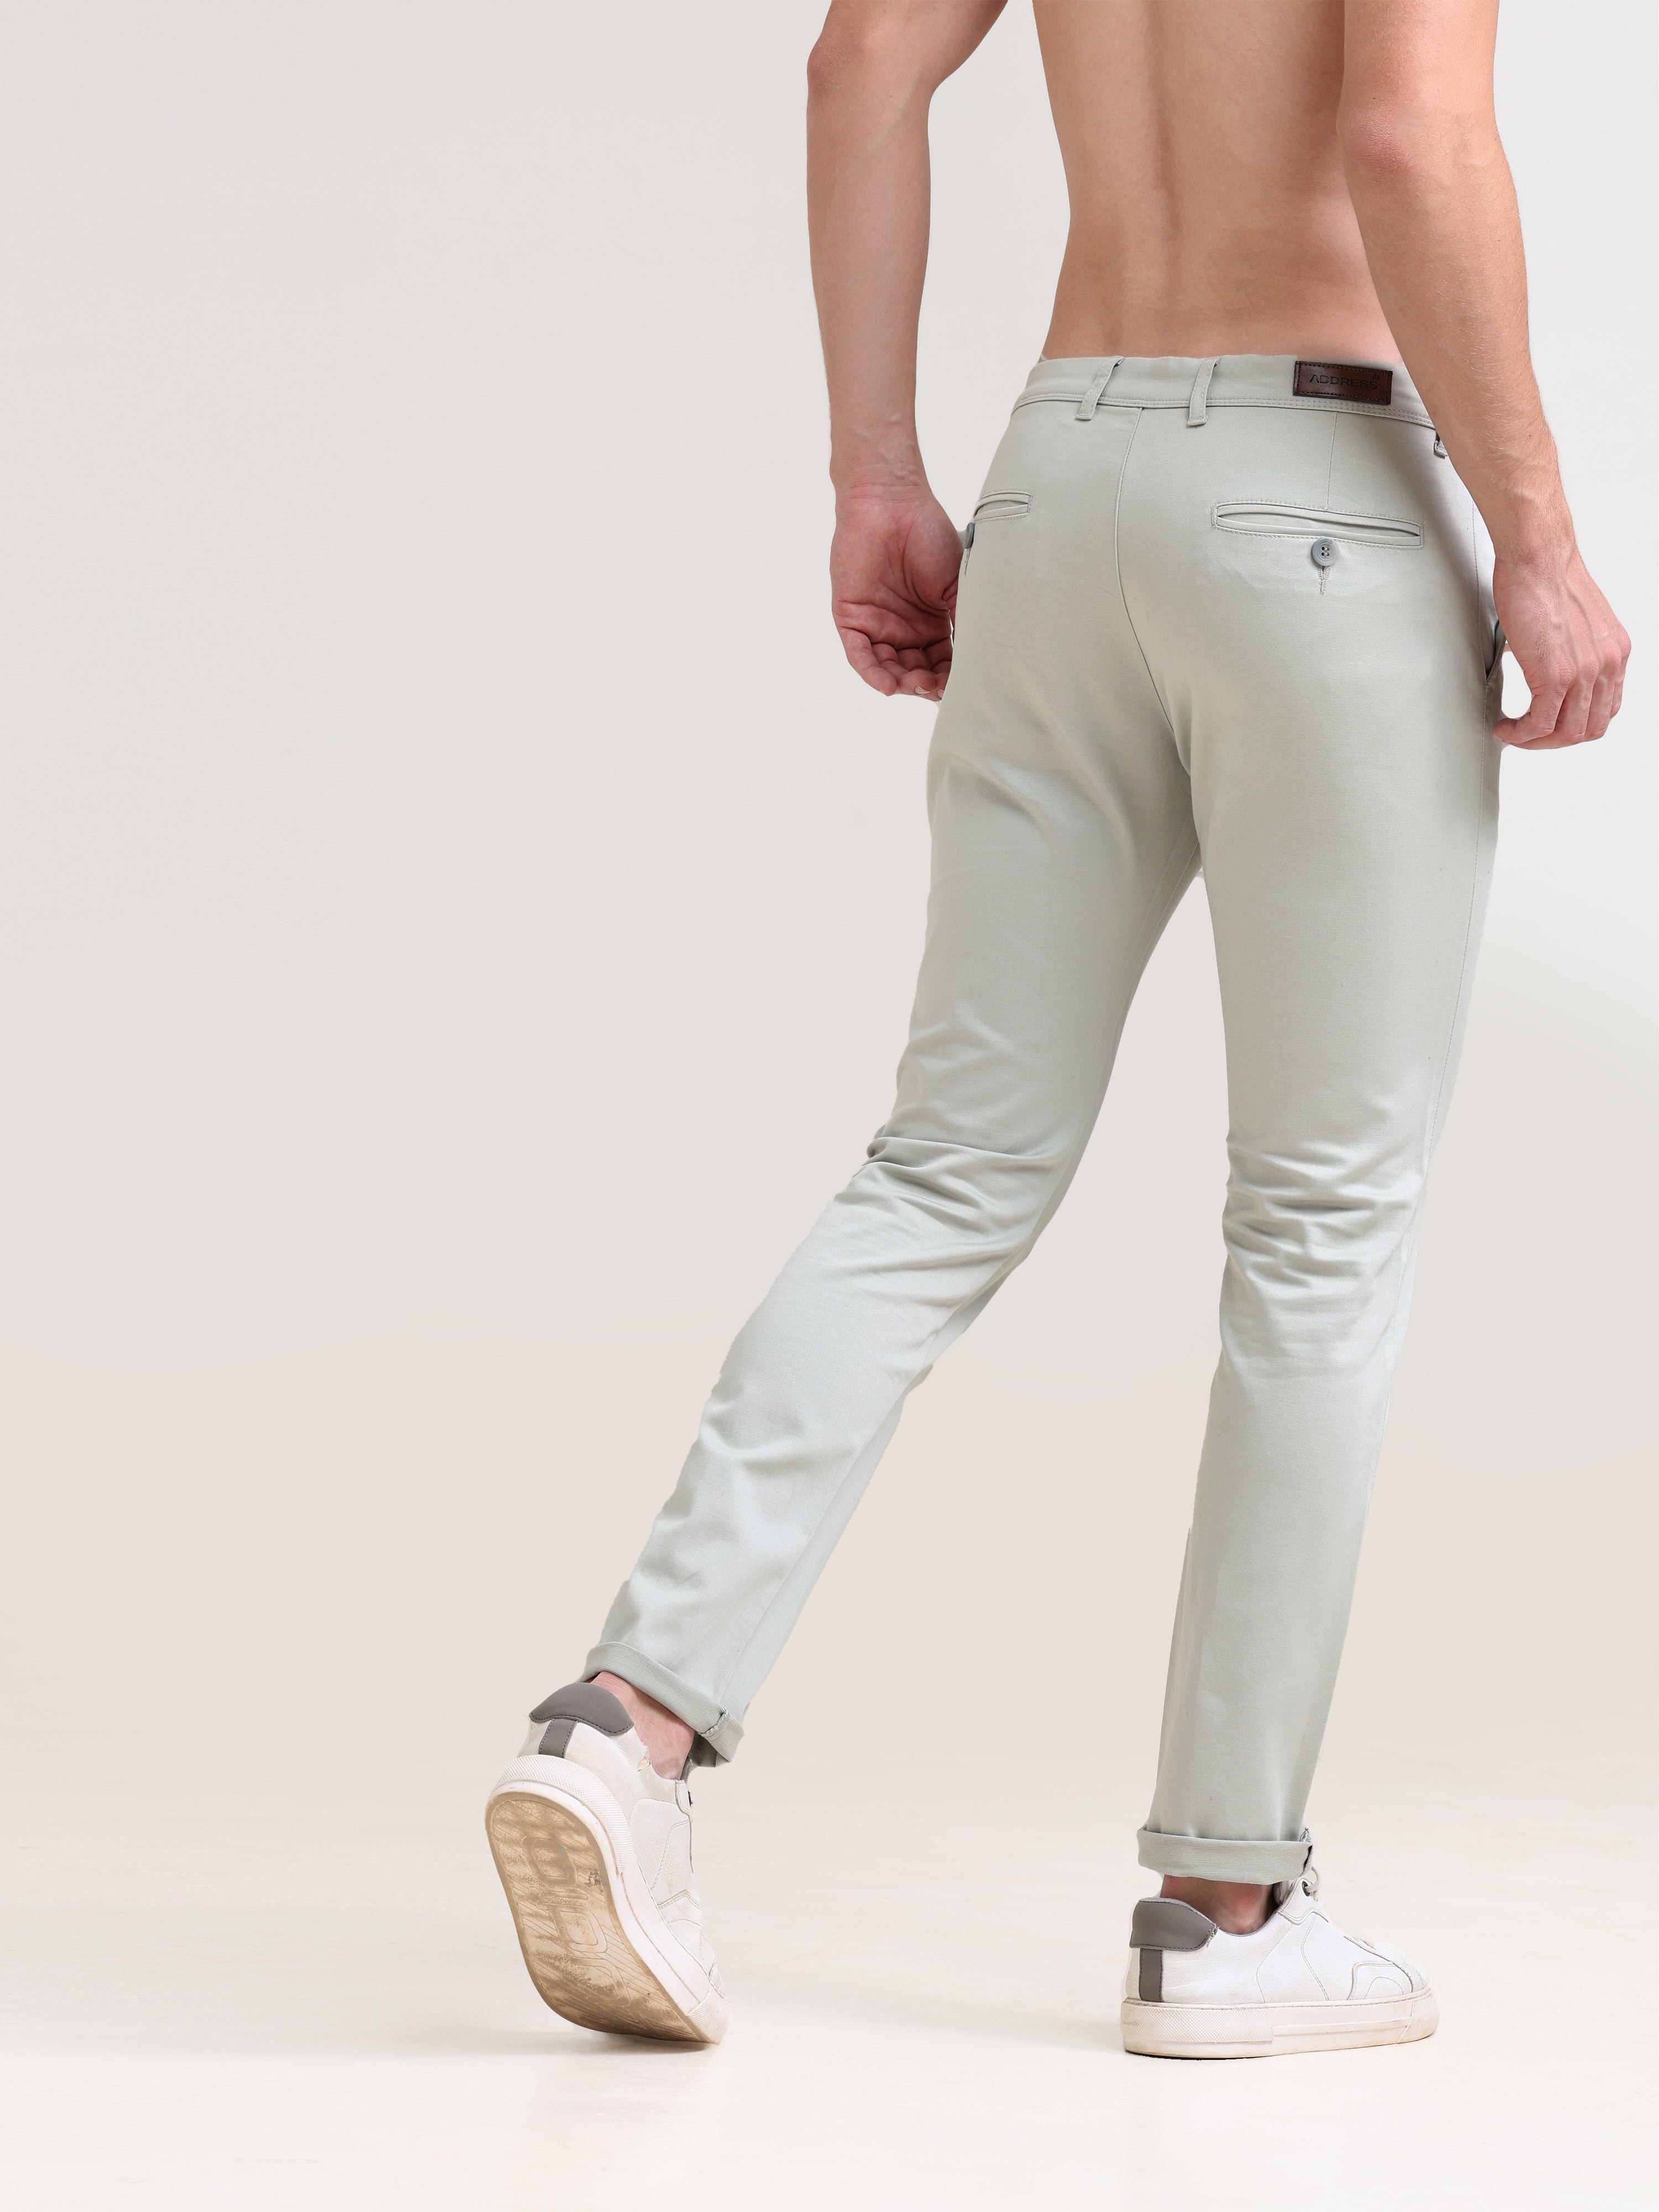 Pisa Green : Cotton Comfort Fit Pants